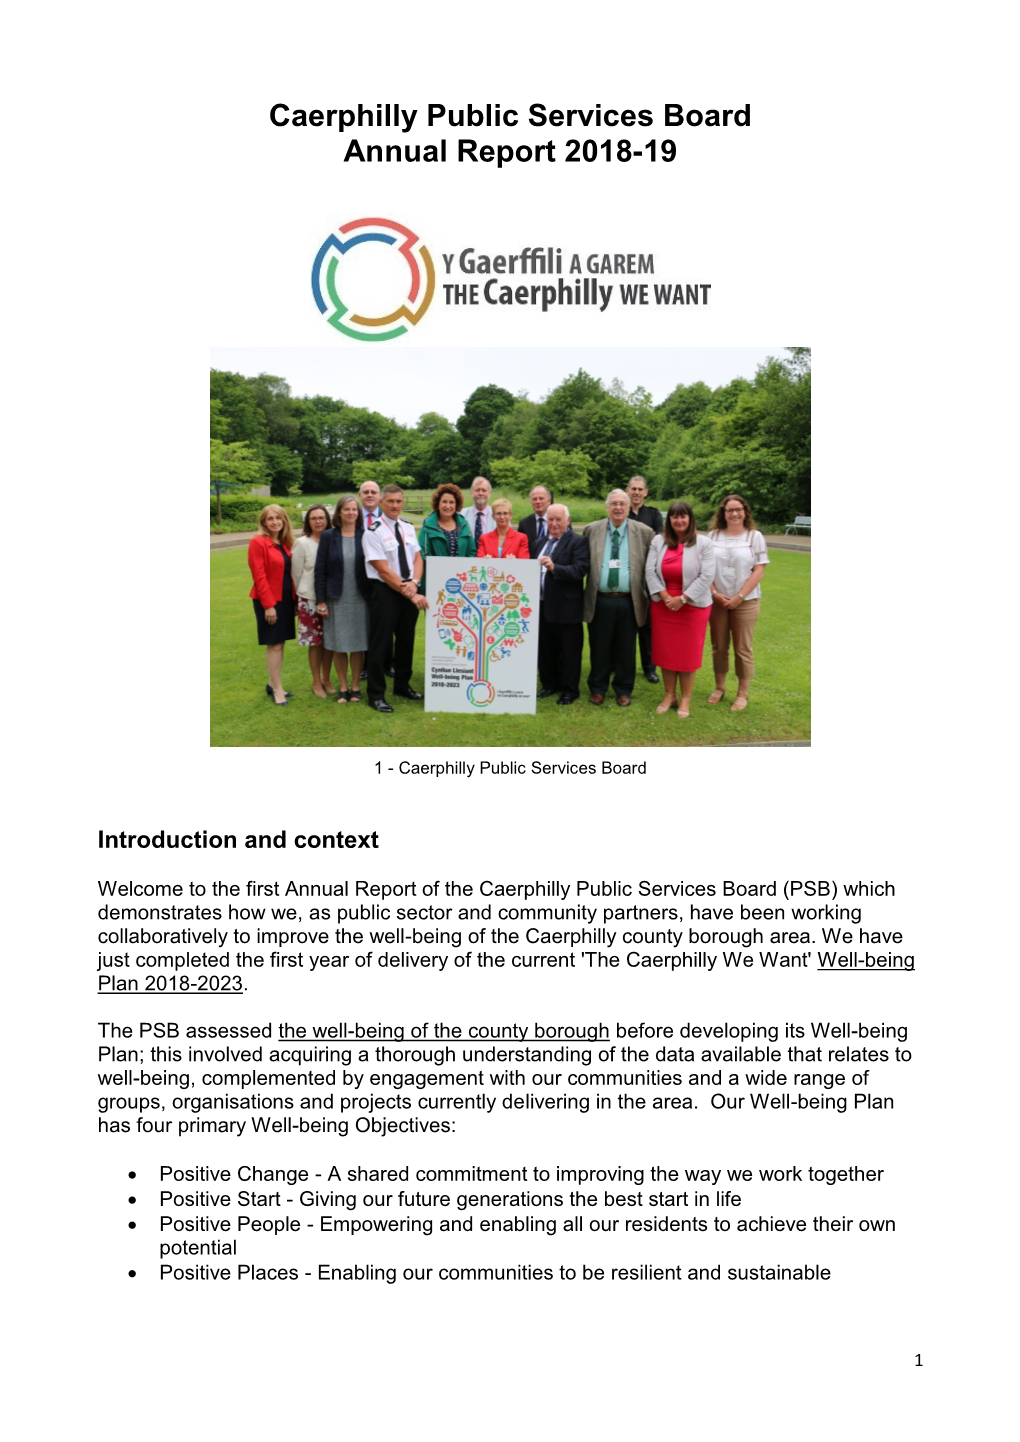 Caerphilly Public Services Board Annual Report 2018-19